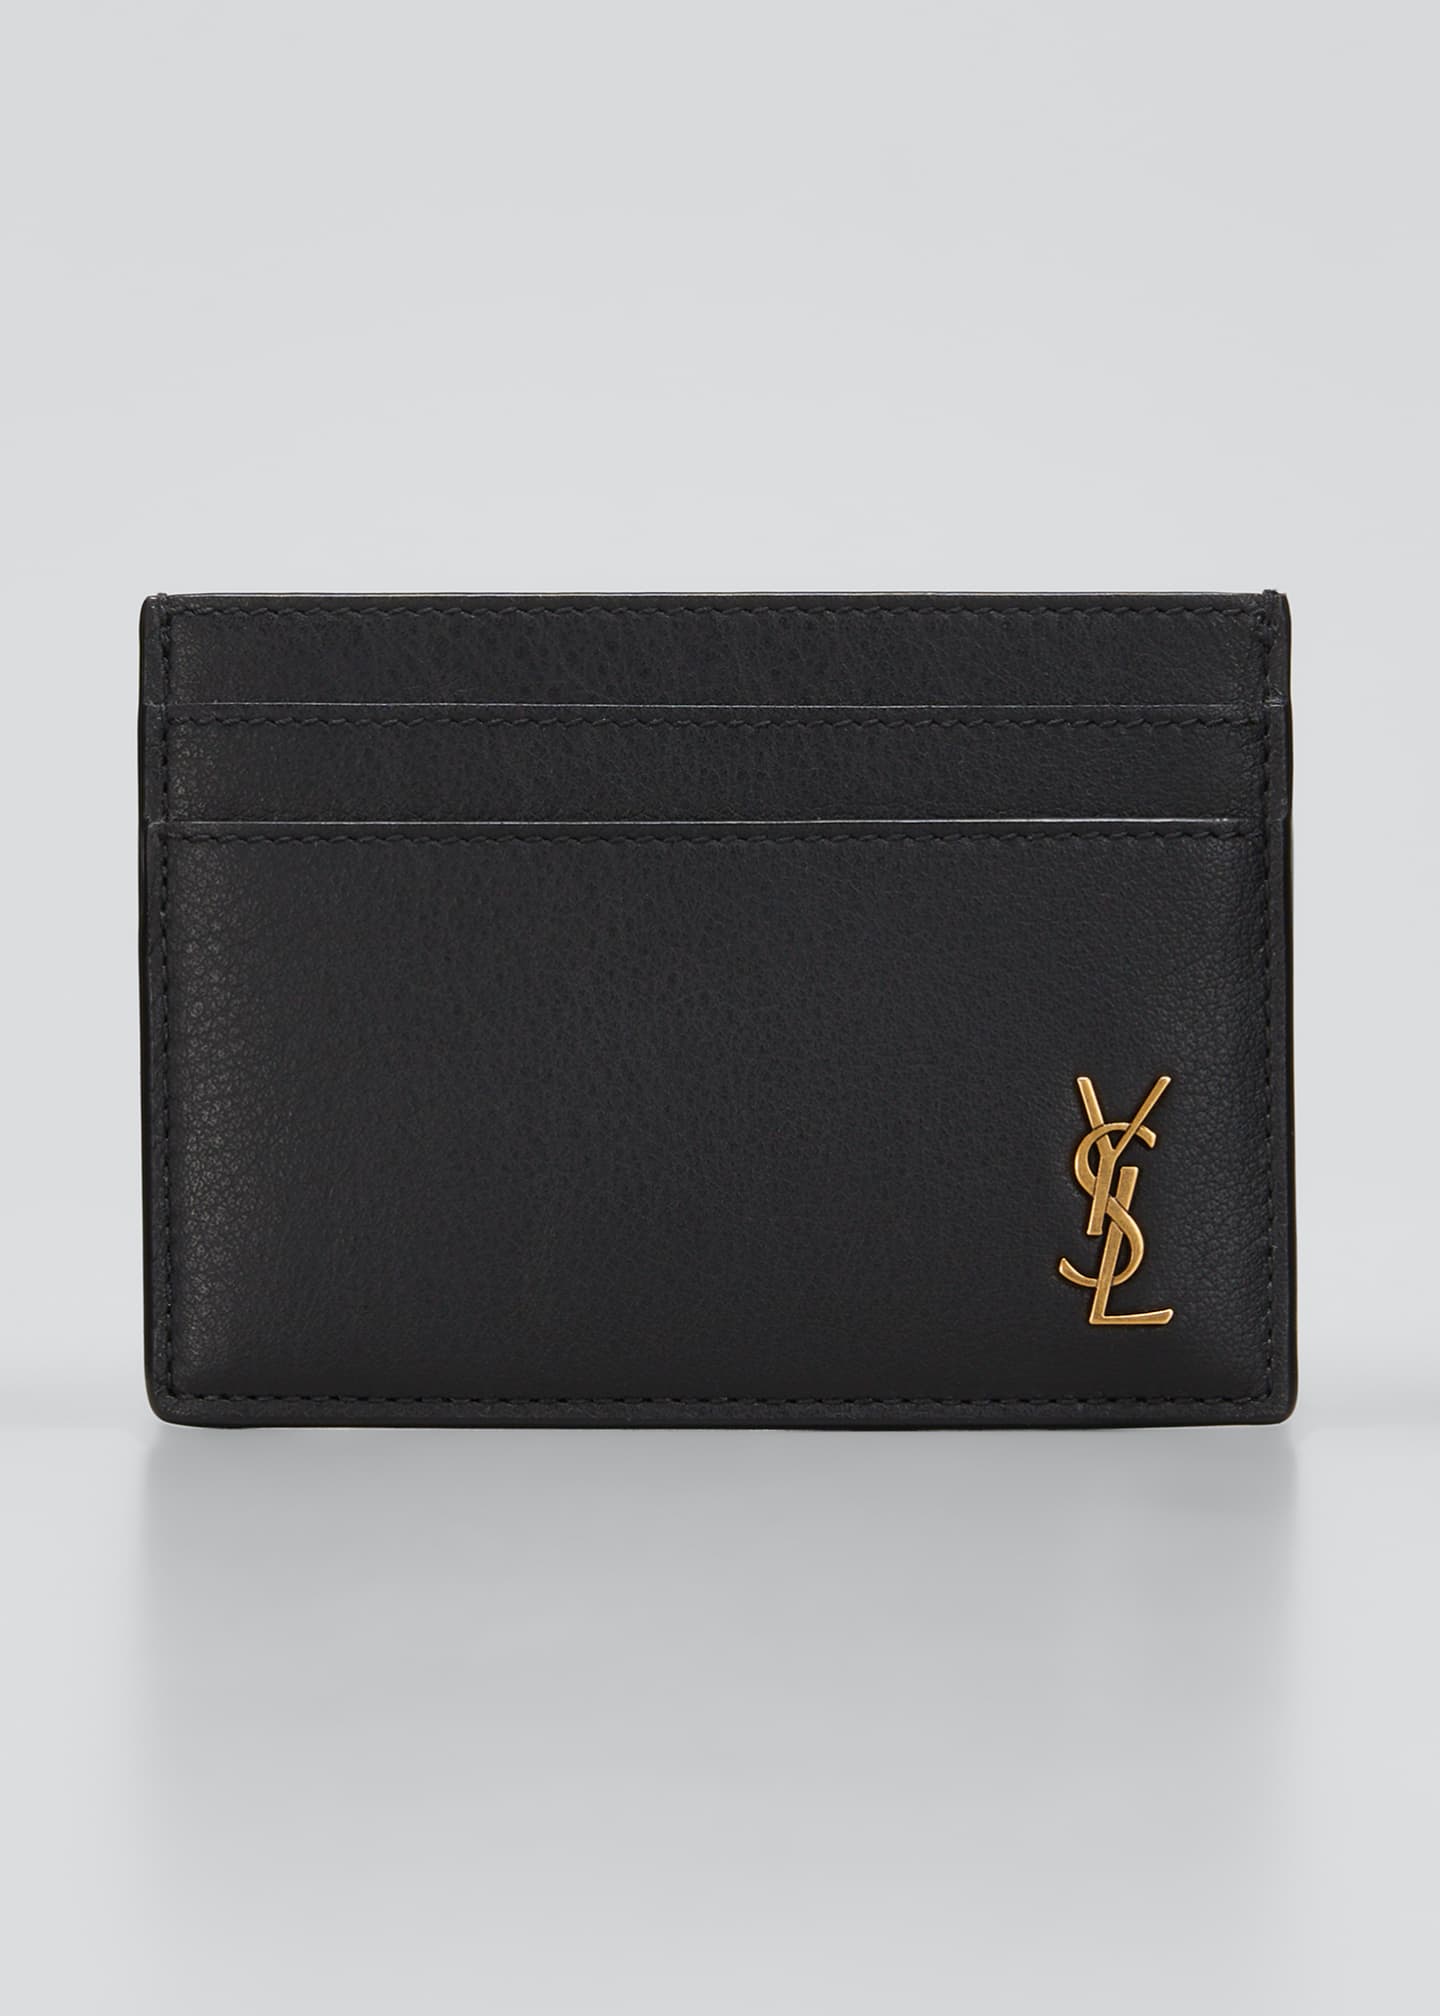 Saint Laurent YSL Monogram Tiny Leather Card Case - Bergdorf Goodman